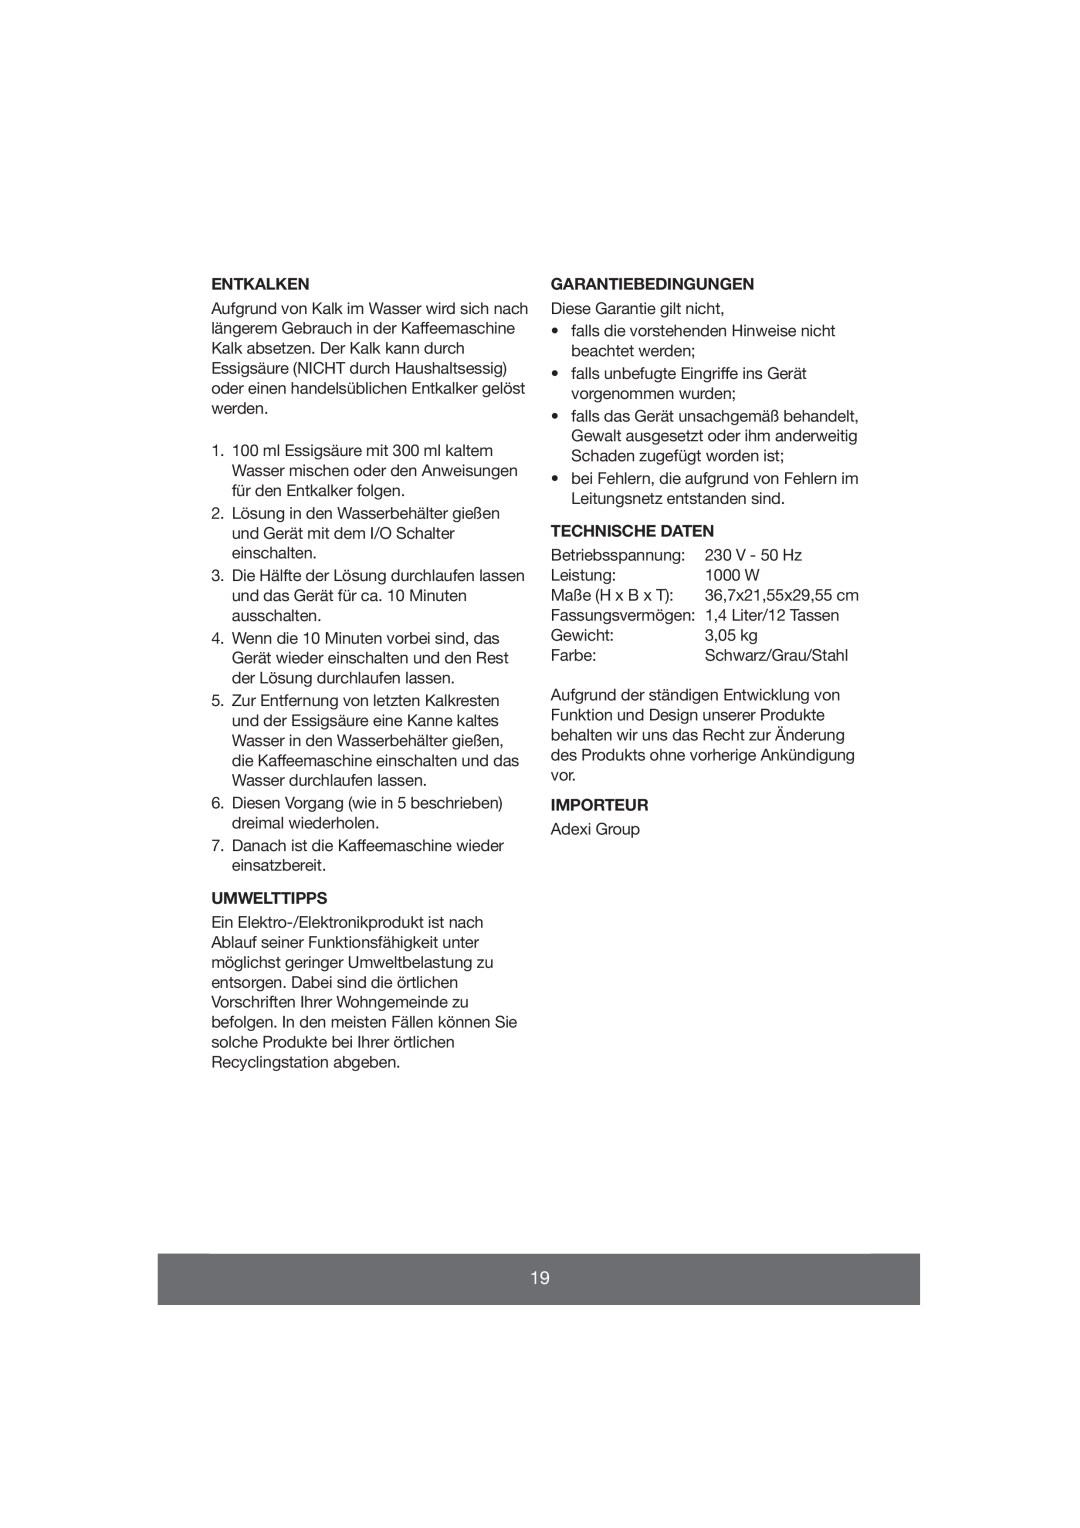 Butler 645-061 manual Entkalken, Umwelttipps, Garantiebedingungen, Technische Daten, Importeur 